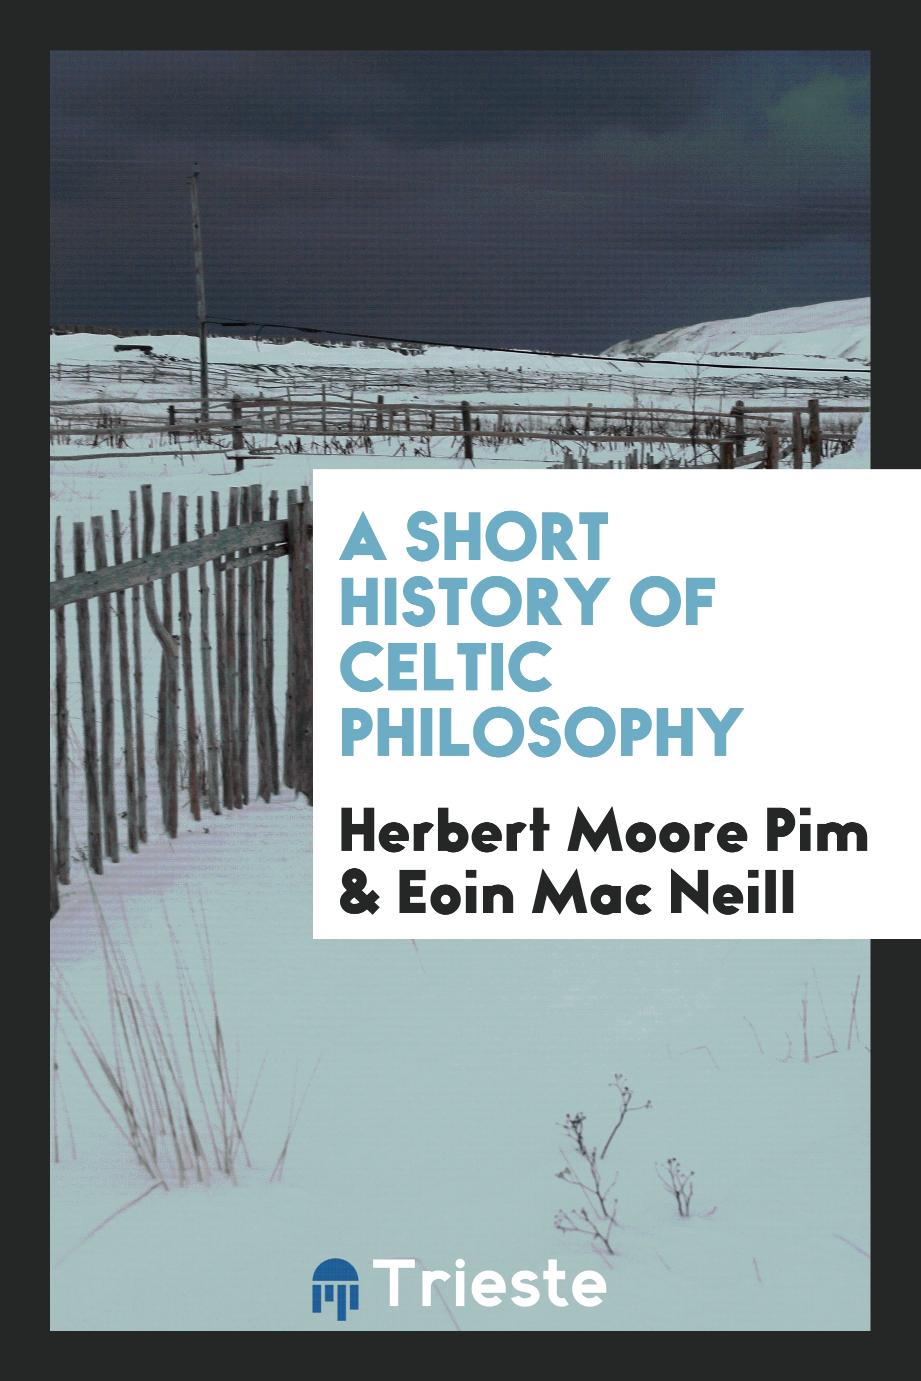 A short history of Celtic philosophy